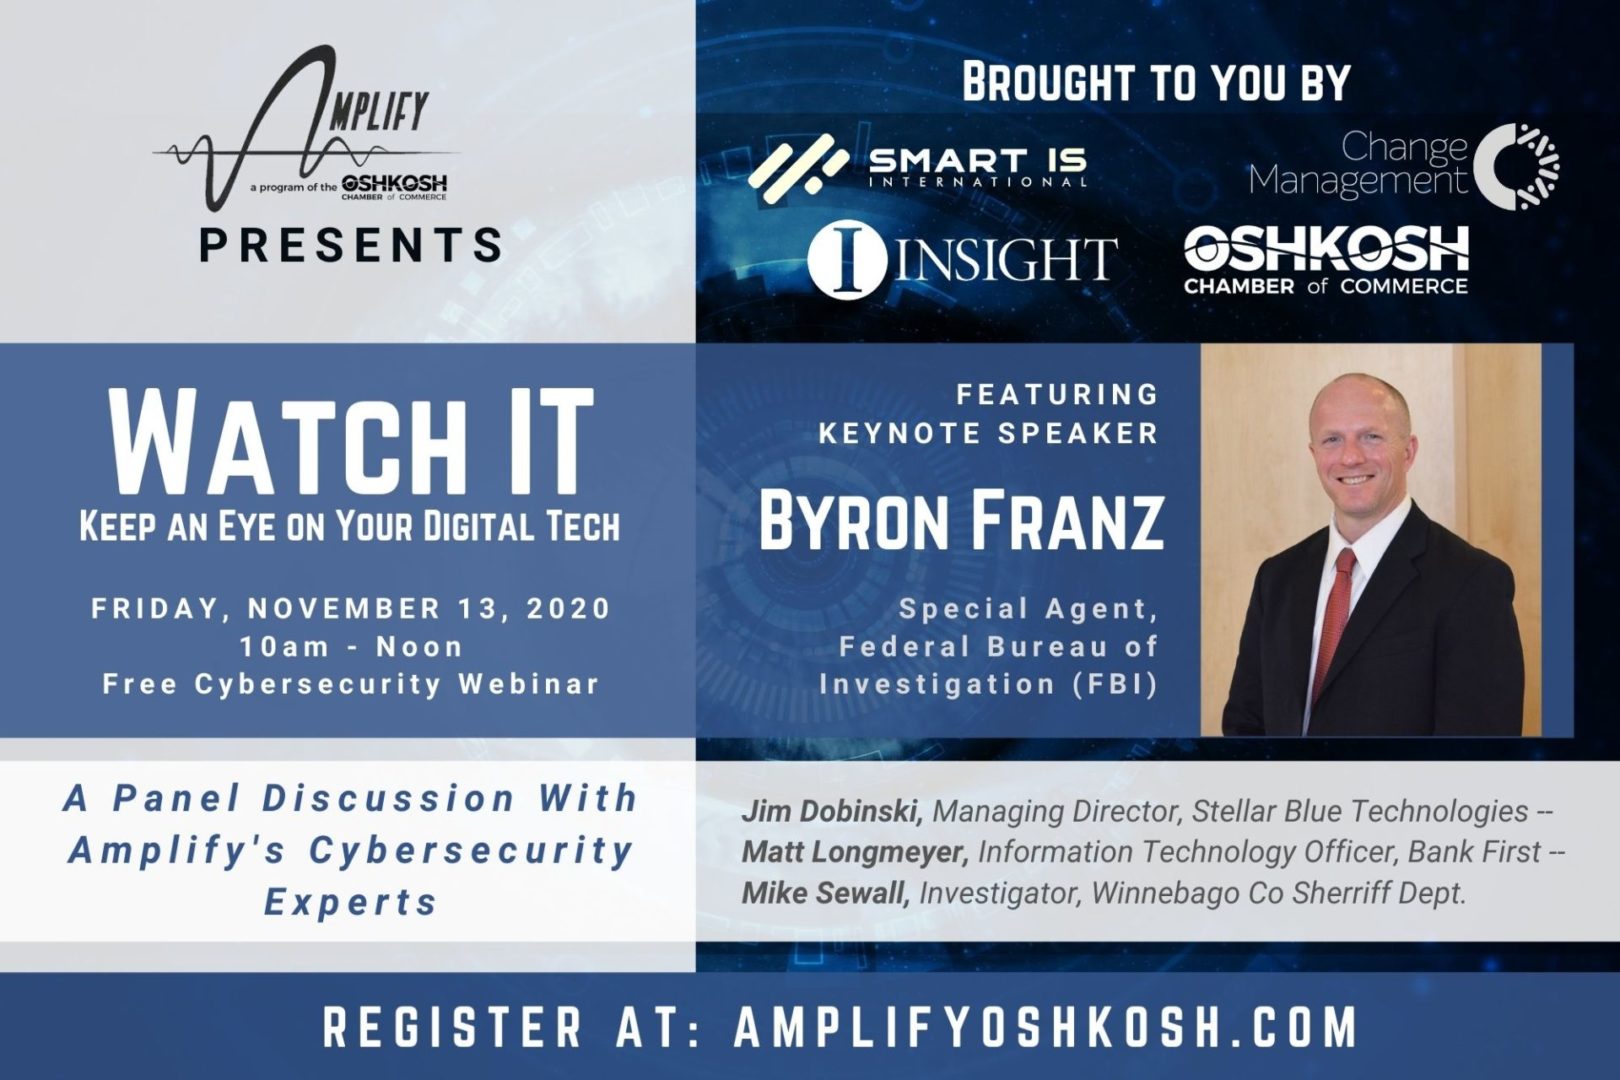 Amplify Oshkosh Watch IT: Keep an Eye on Your Digital Tech – November 13, 2020